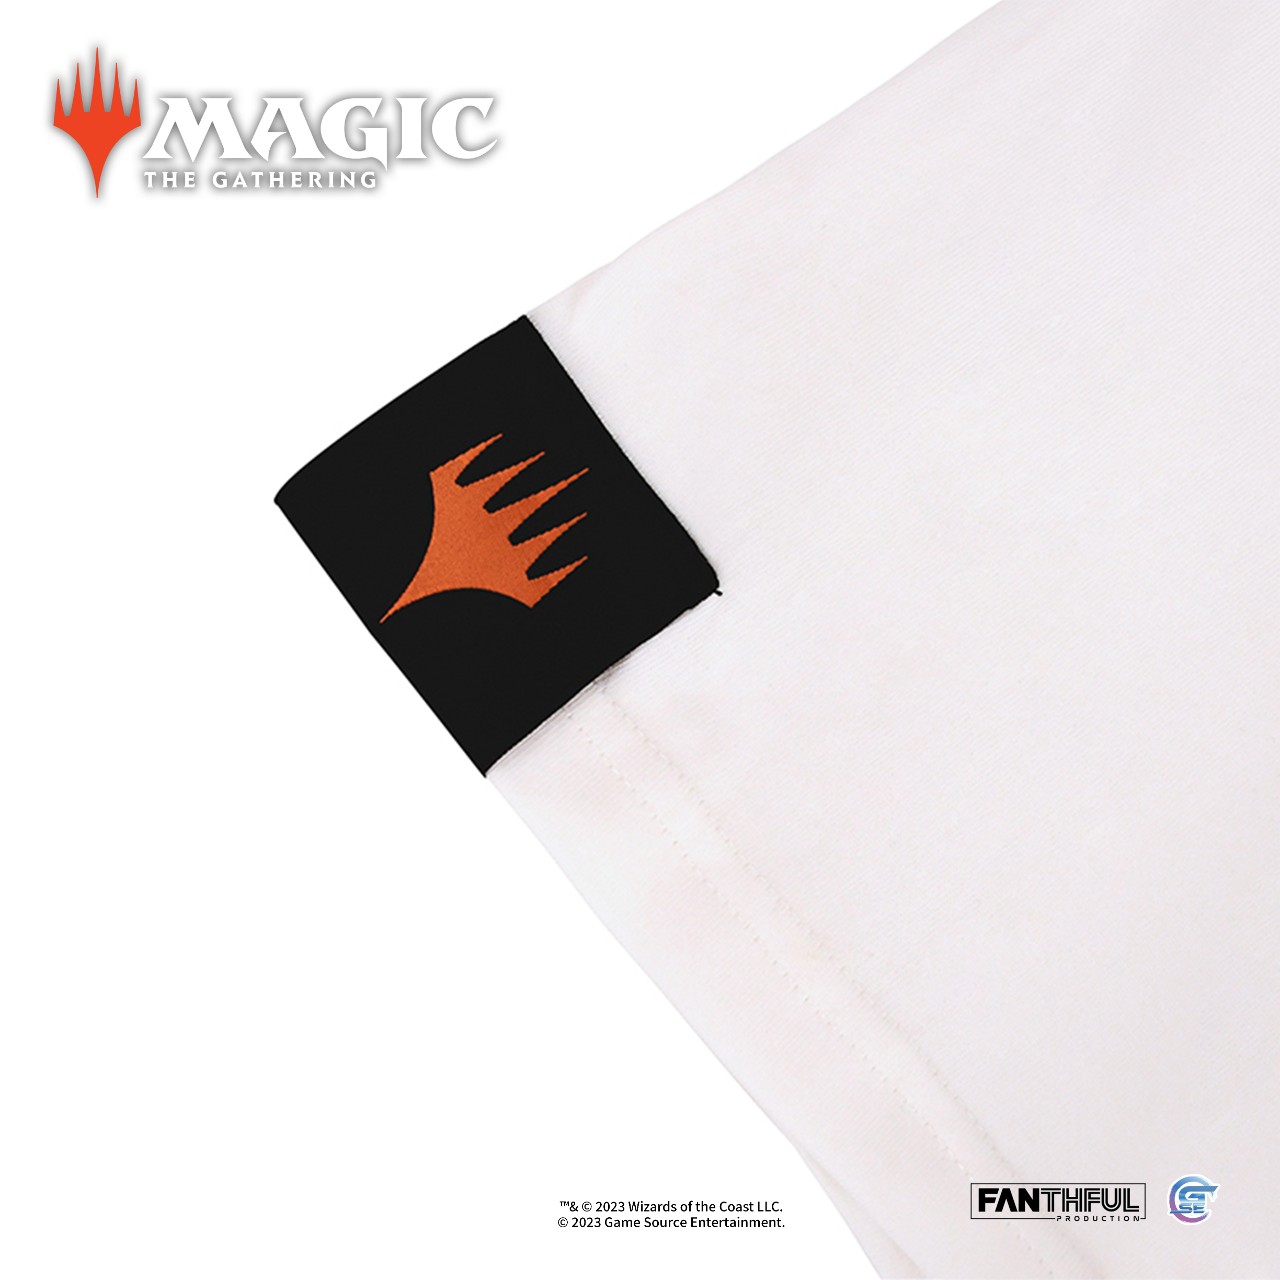 Magic The Gathering_product shot_T-shirt white_03